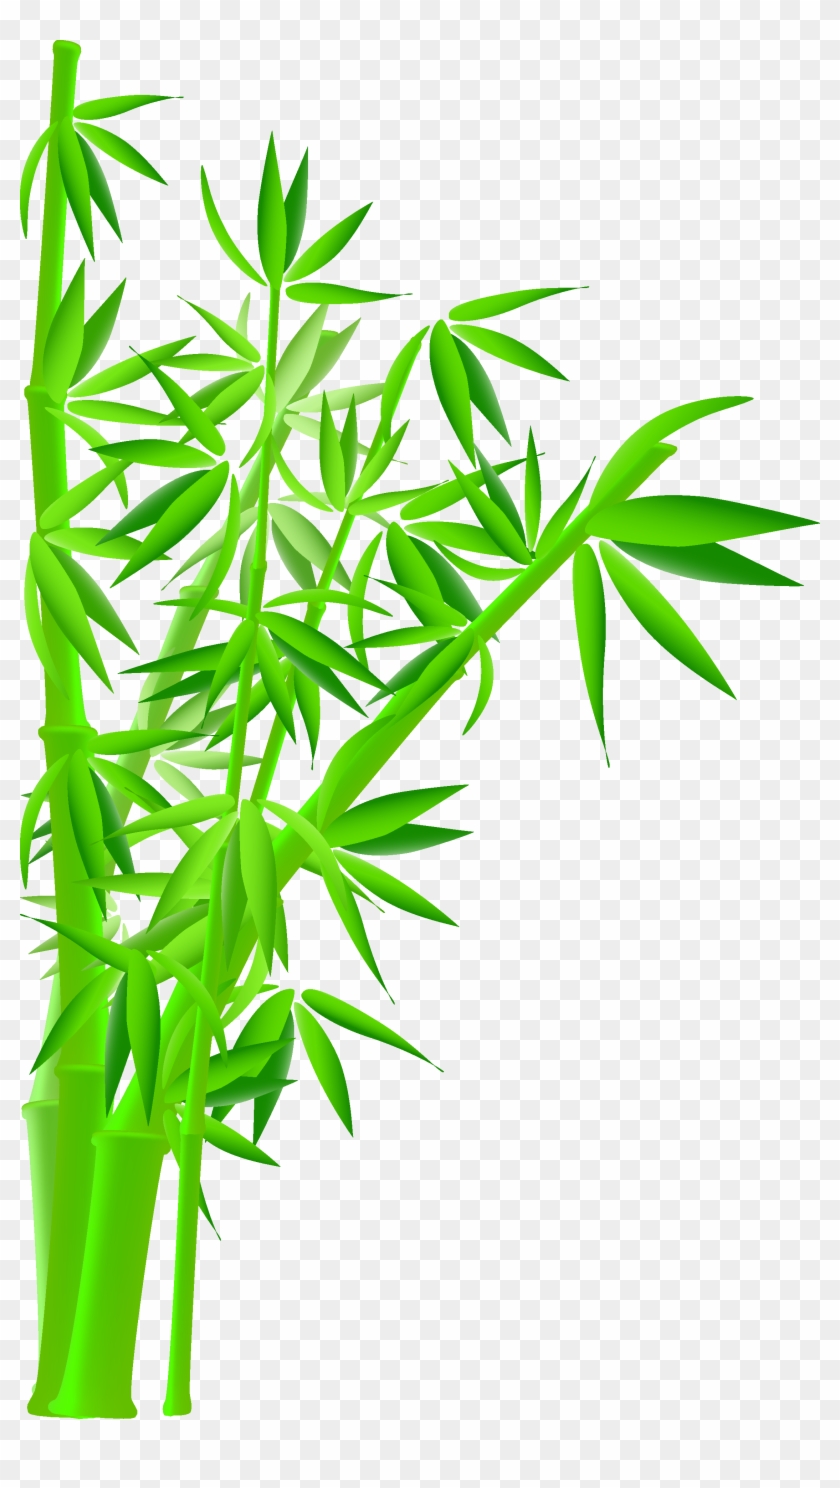 Royalty-free Bamboo Stock Photography Illustration - Bamboo Tree #1017324